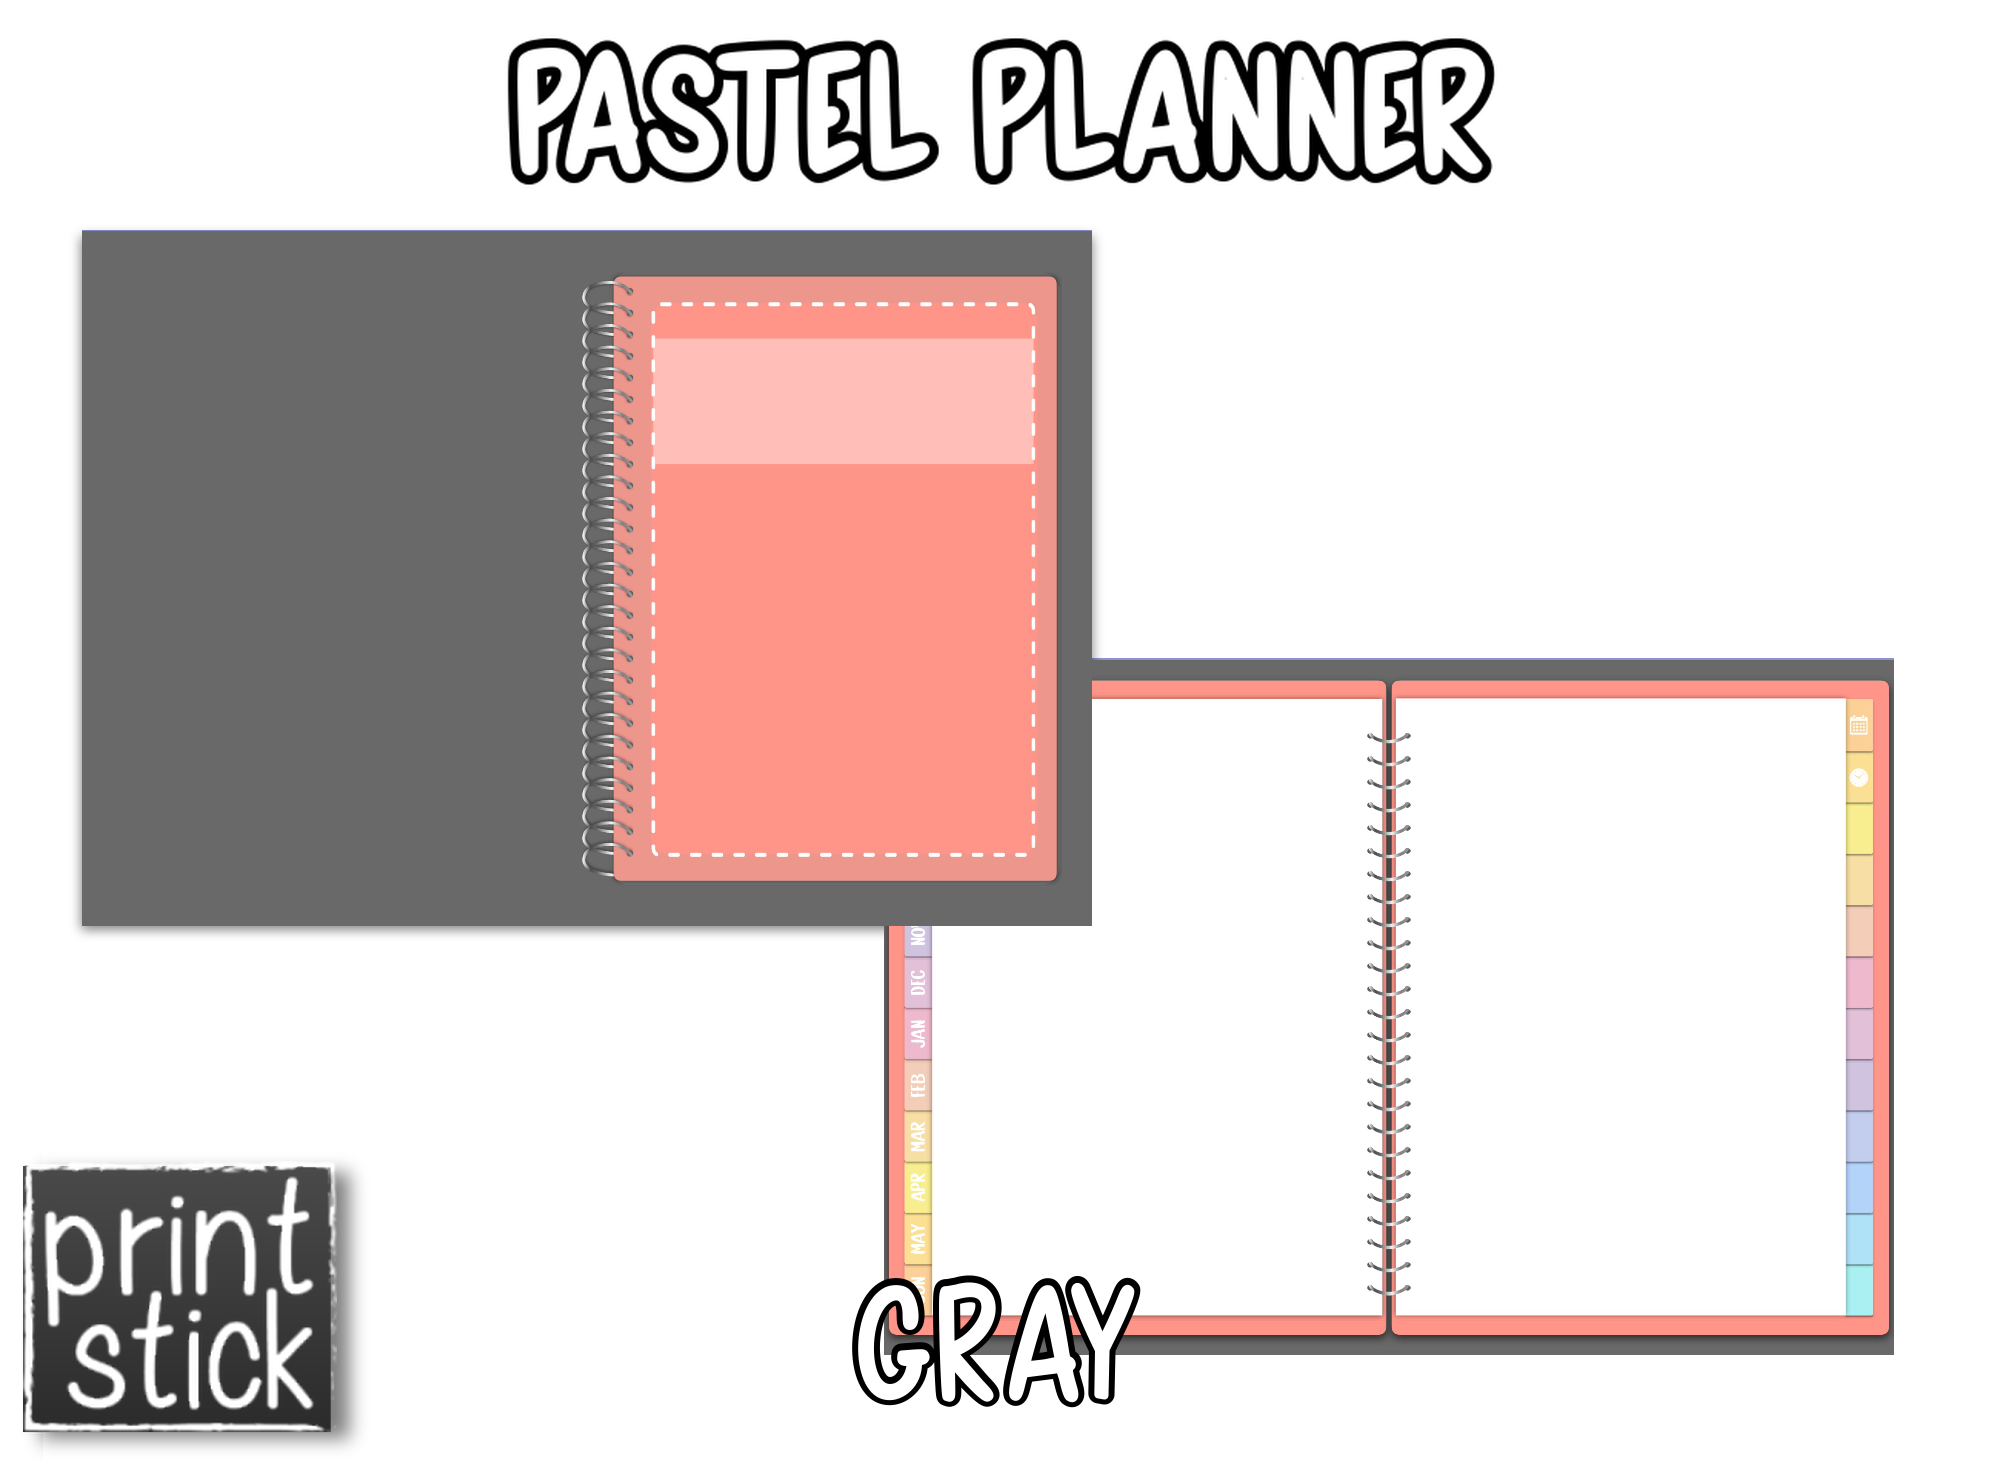 Pastel Planner - Print Stick